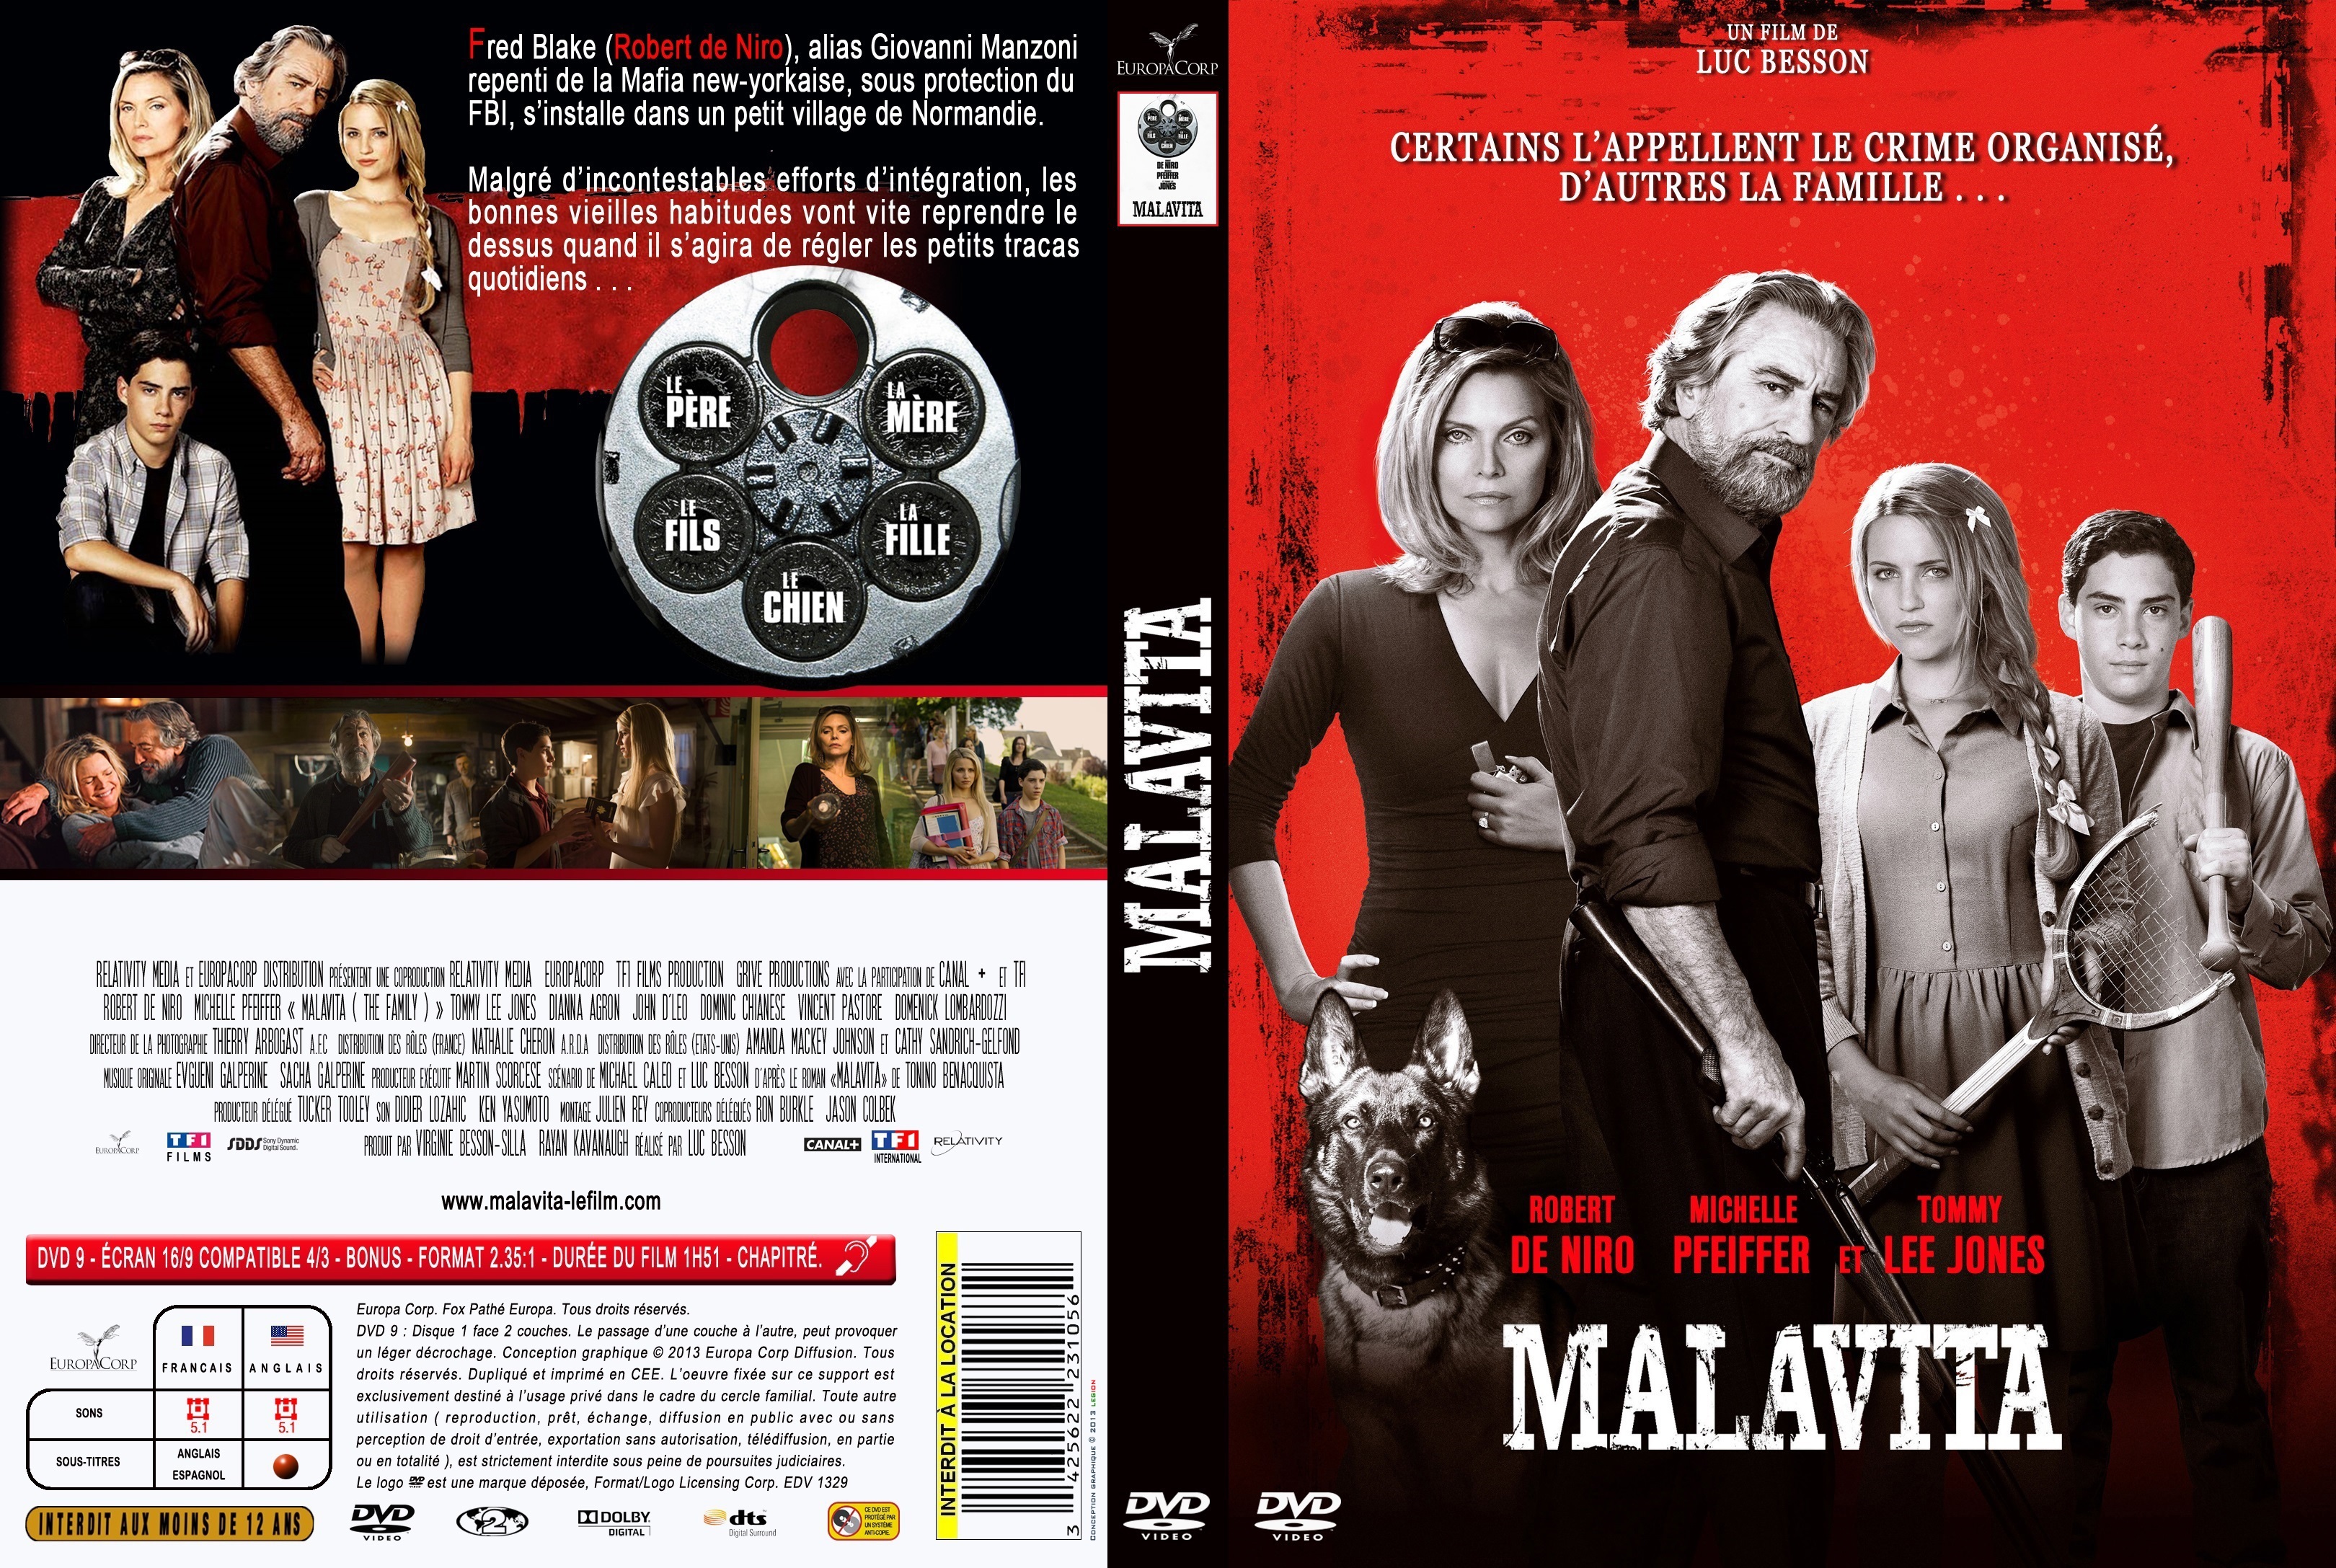 Jaquette DVD Malavita custom